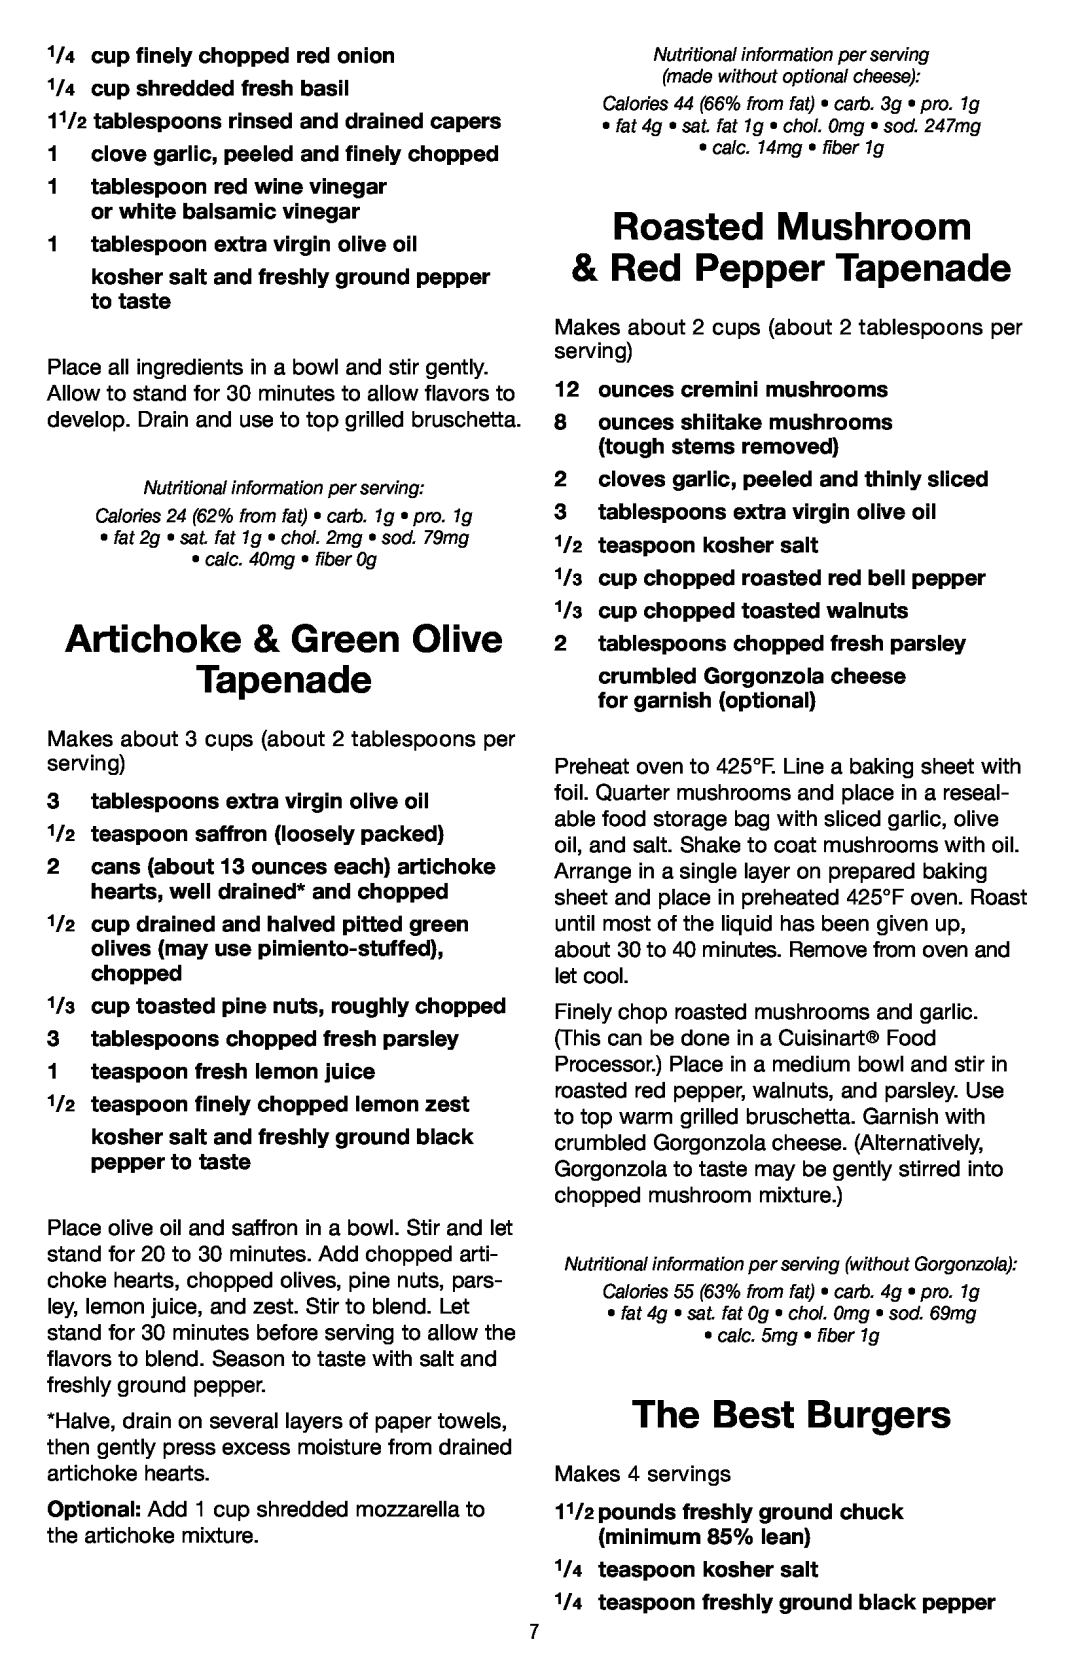 Cuisinart GR-2 manual Artichoke & Green Olive Tapenade, Roasted Mushroom Red Pepper Tapenade, The Best Burgers 